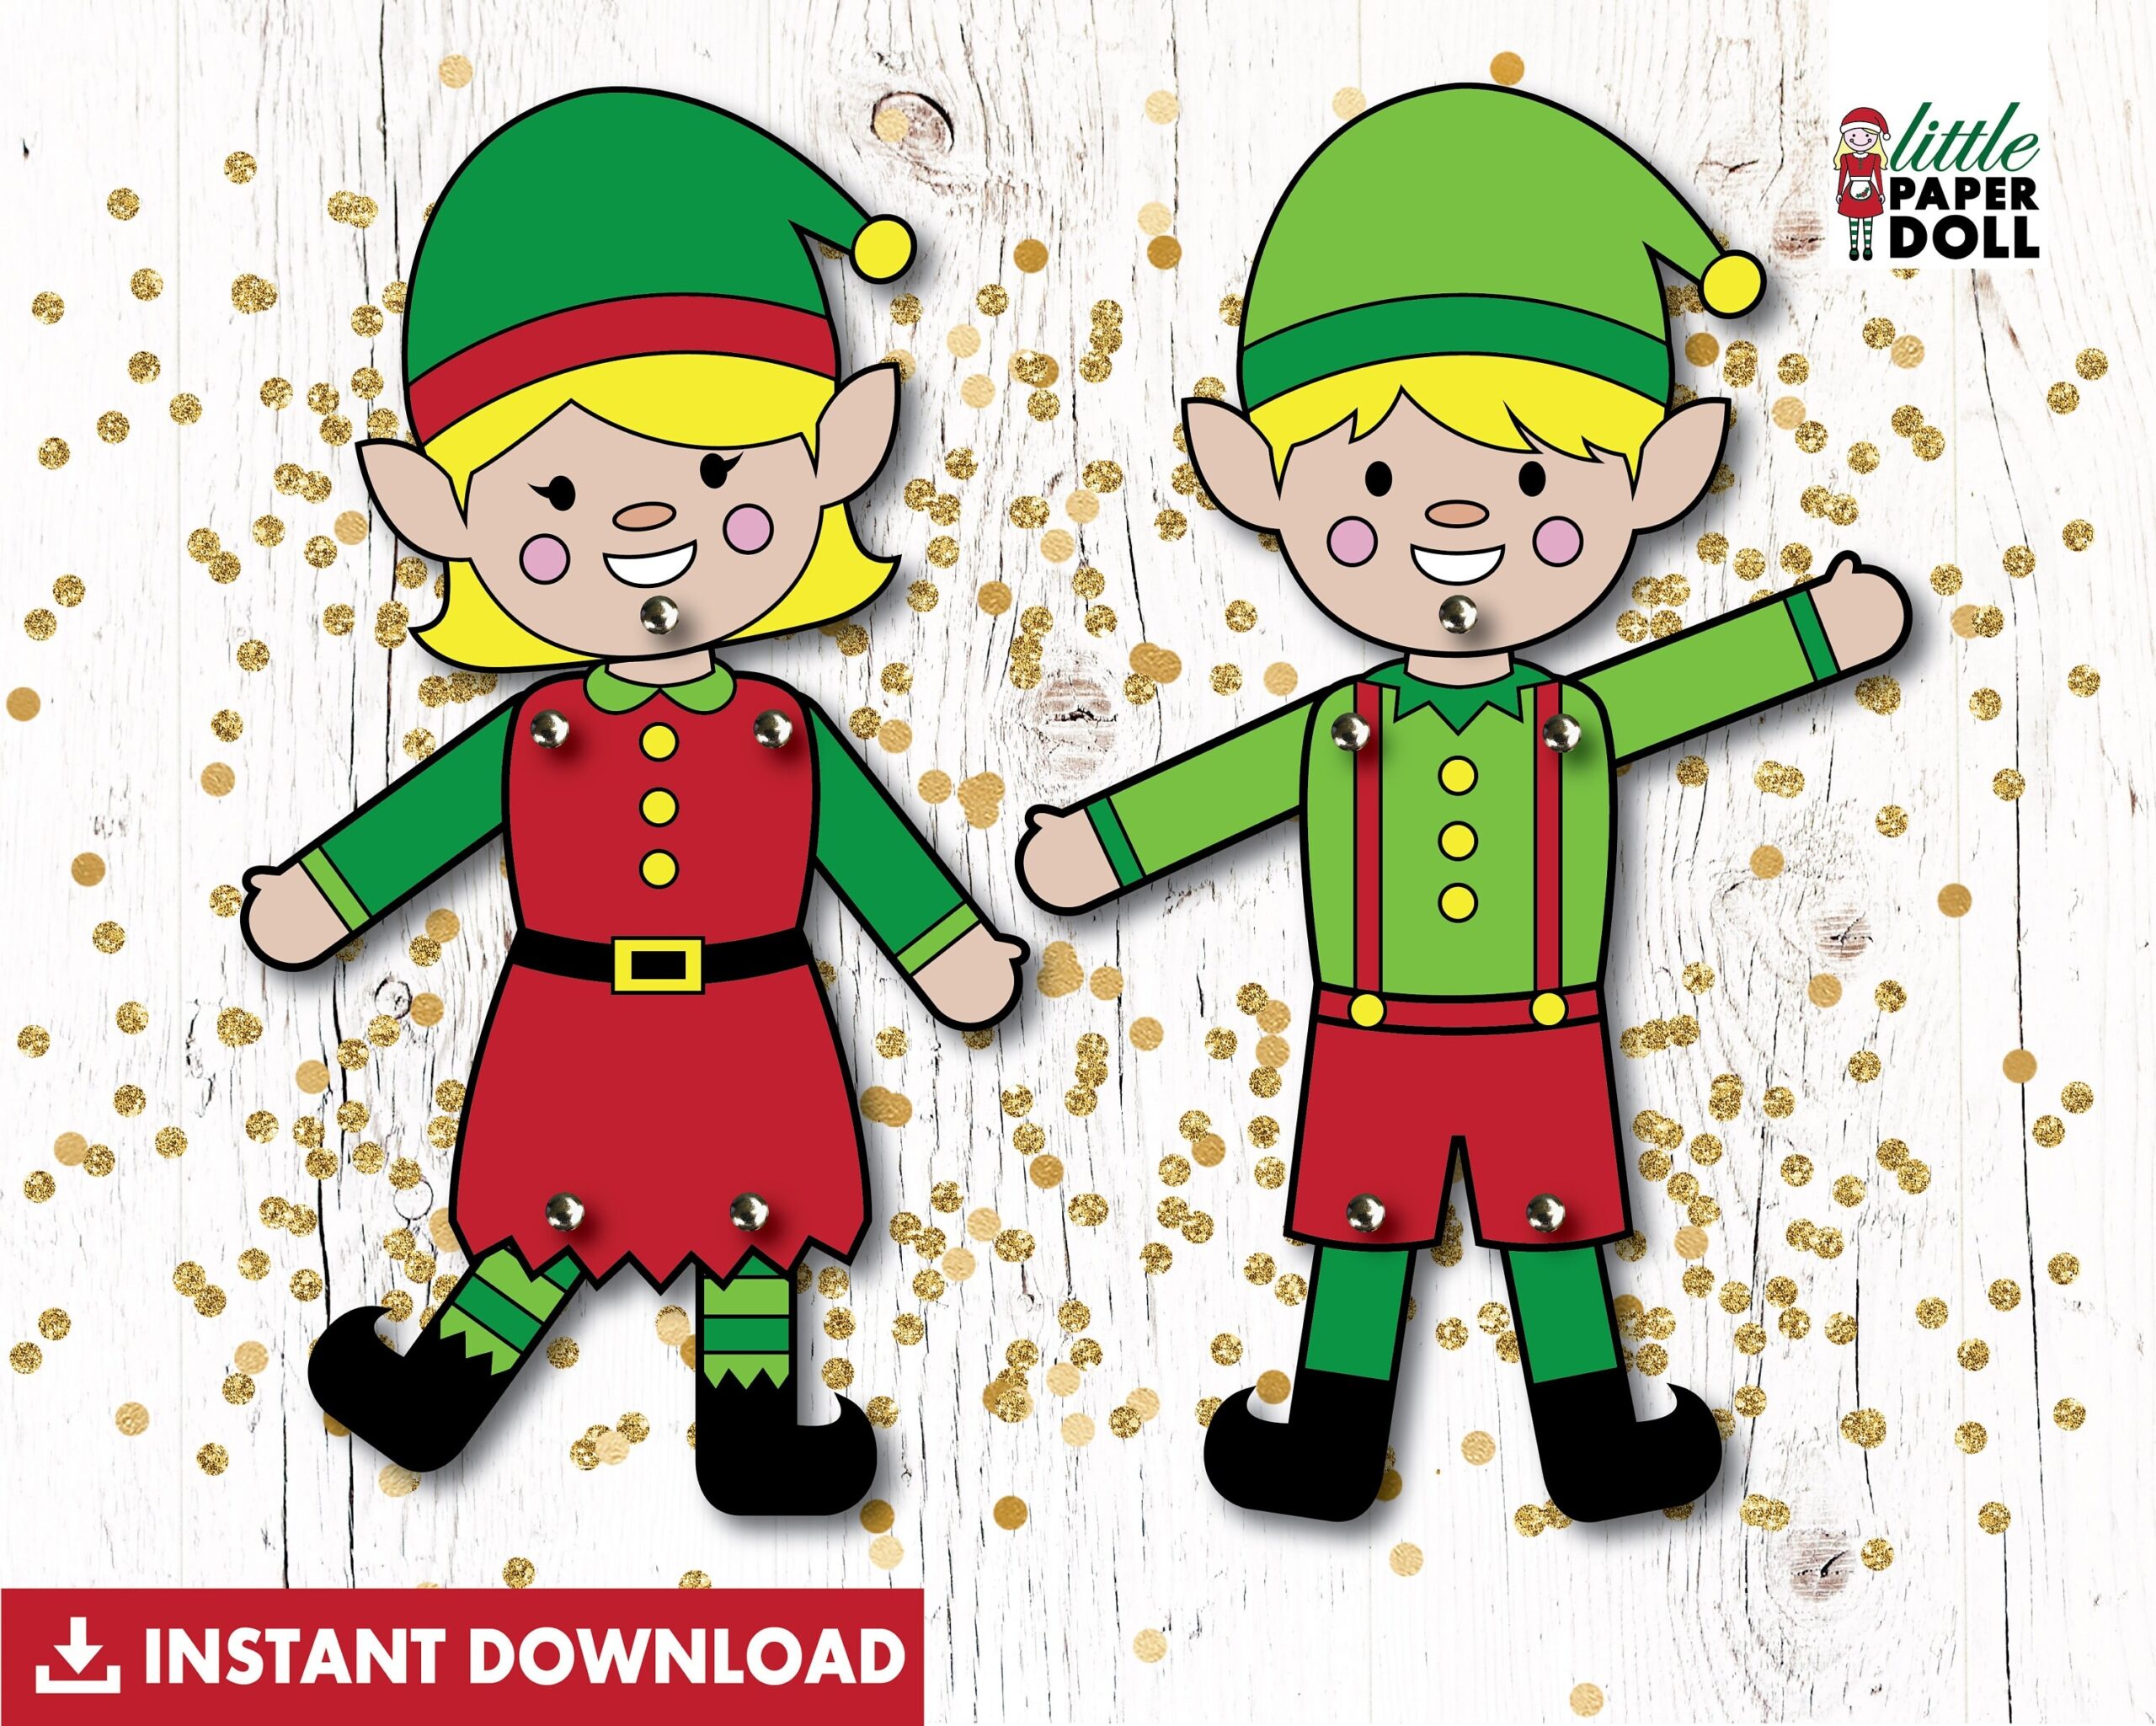 Elf Paper Dolls INSTANT DOWNLOAD Elf Paper Puppets Elf Christmas Cutout Activity DIY Elf Kids Christmas Craft Etsy